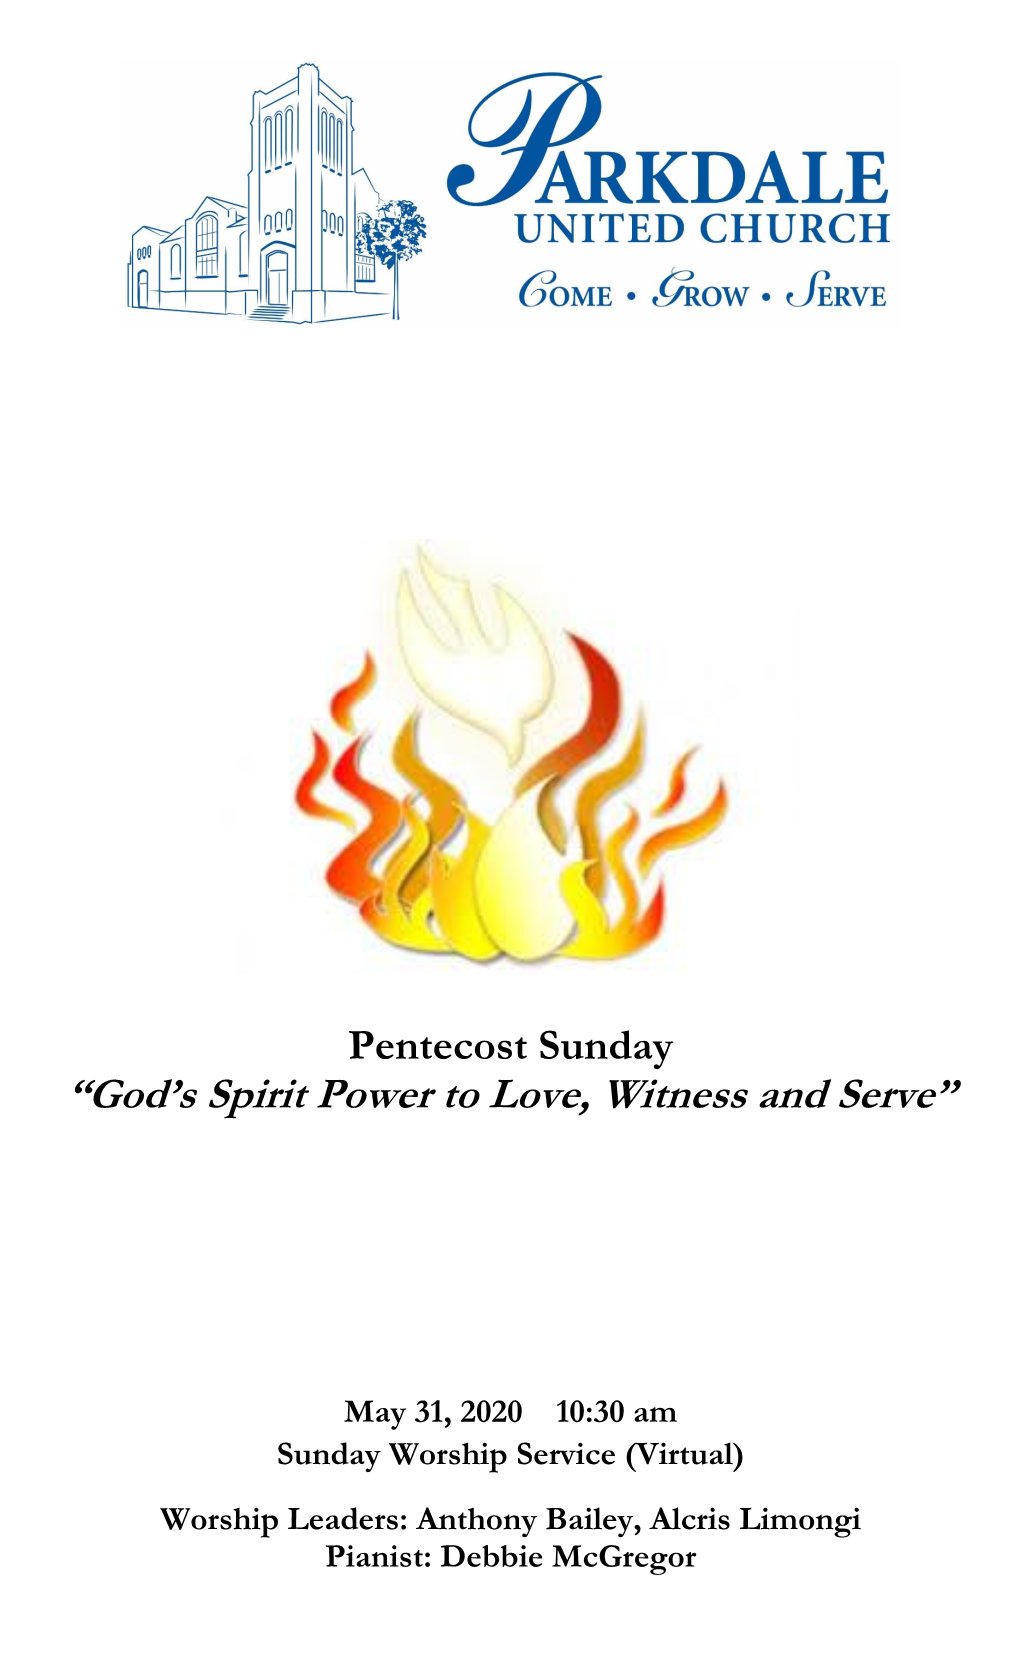 Pentecost Prayer